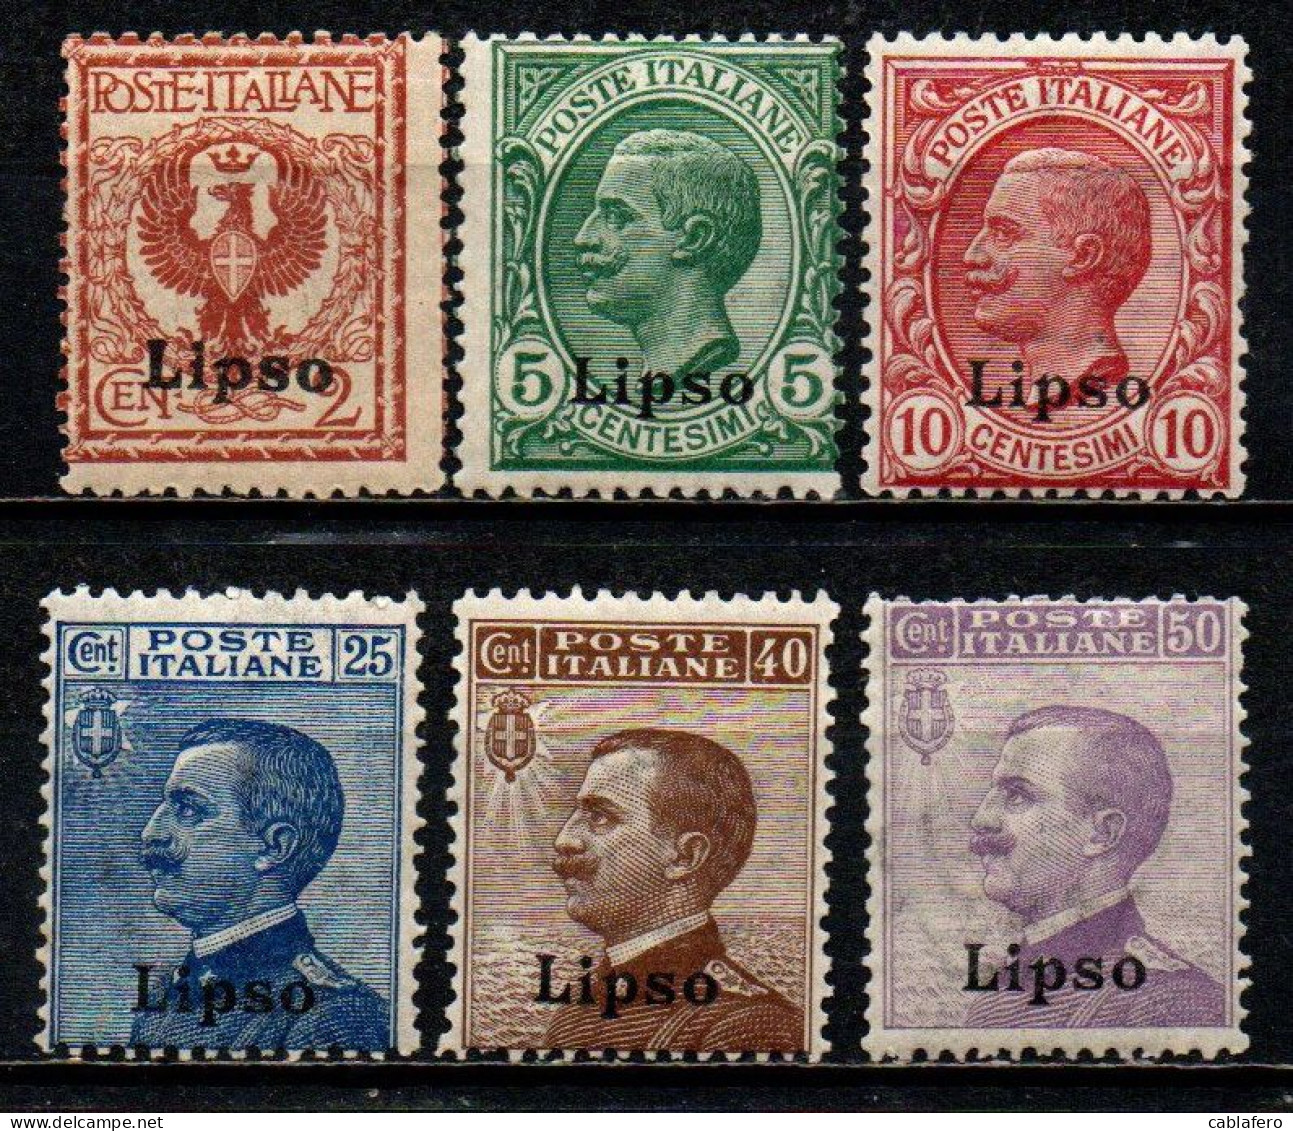 COLONIE ITALIANE - LIPSO - 1912 - EFFIGIE DEL RE VITTORIO EMANUELE III - MNH - Aegean (Lipso)